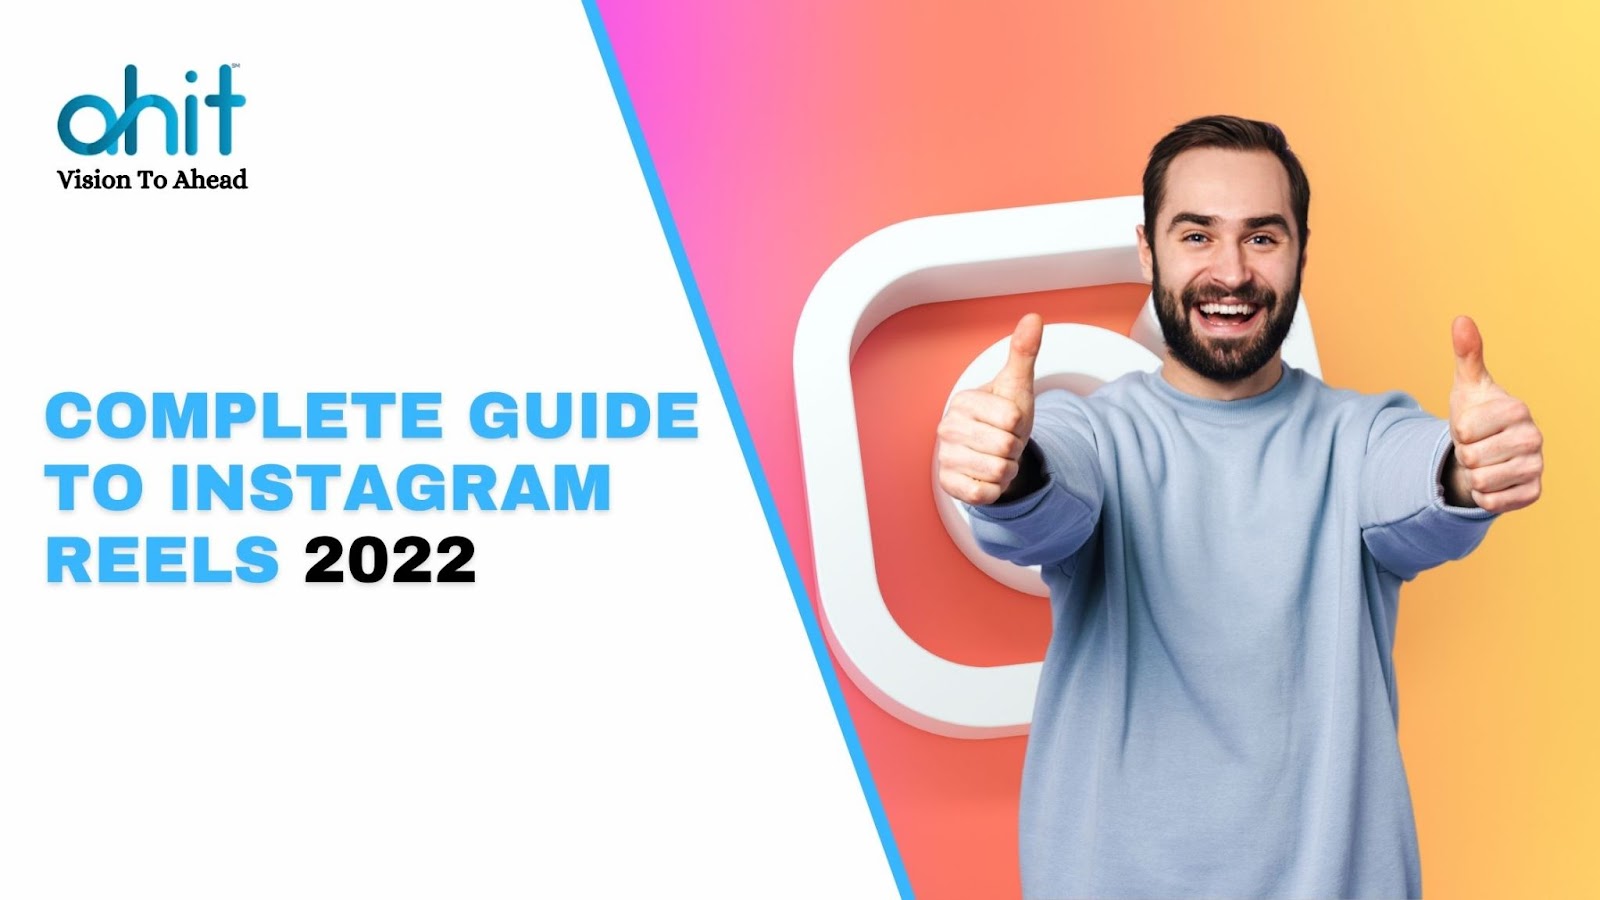 The Most Detailed Guide On Instagram Reels In 2022, Instagram Reels Guide.